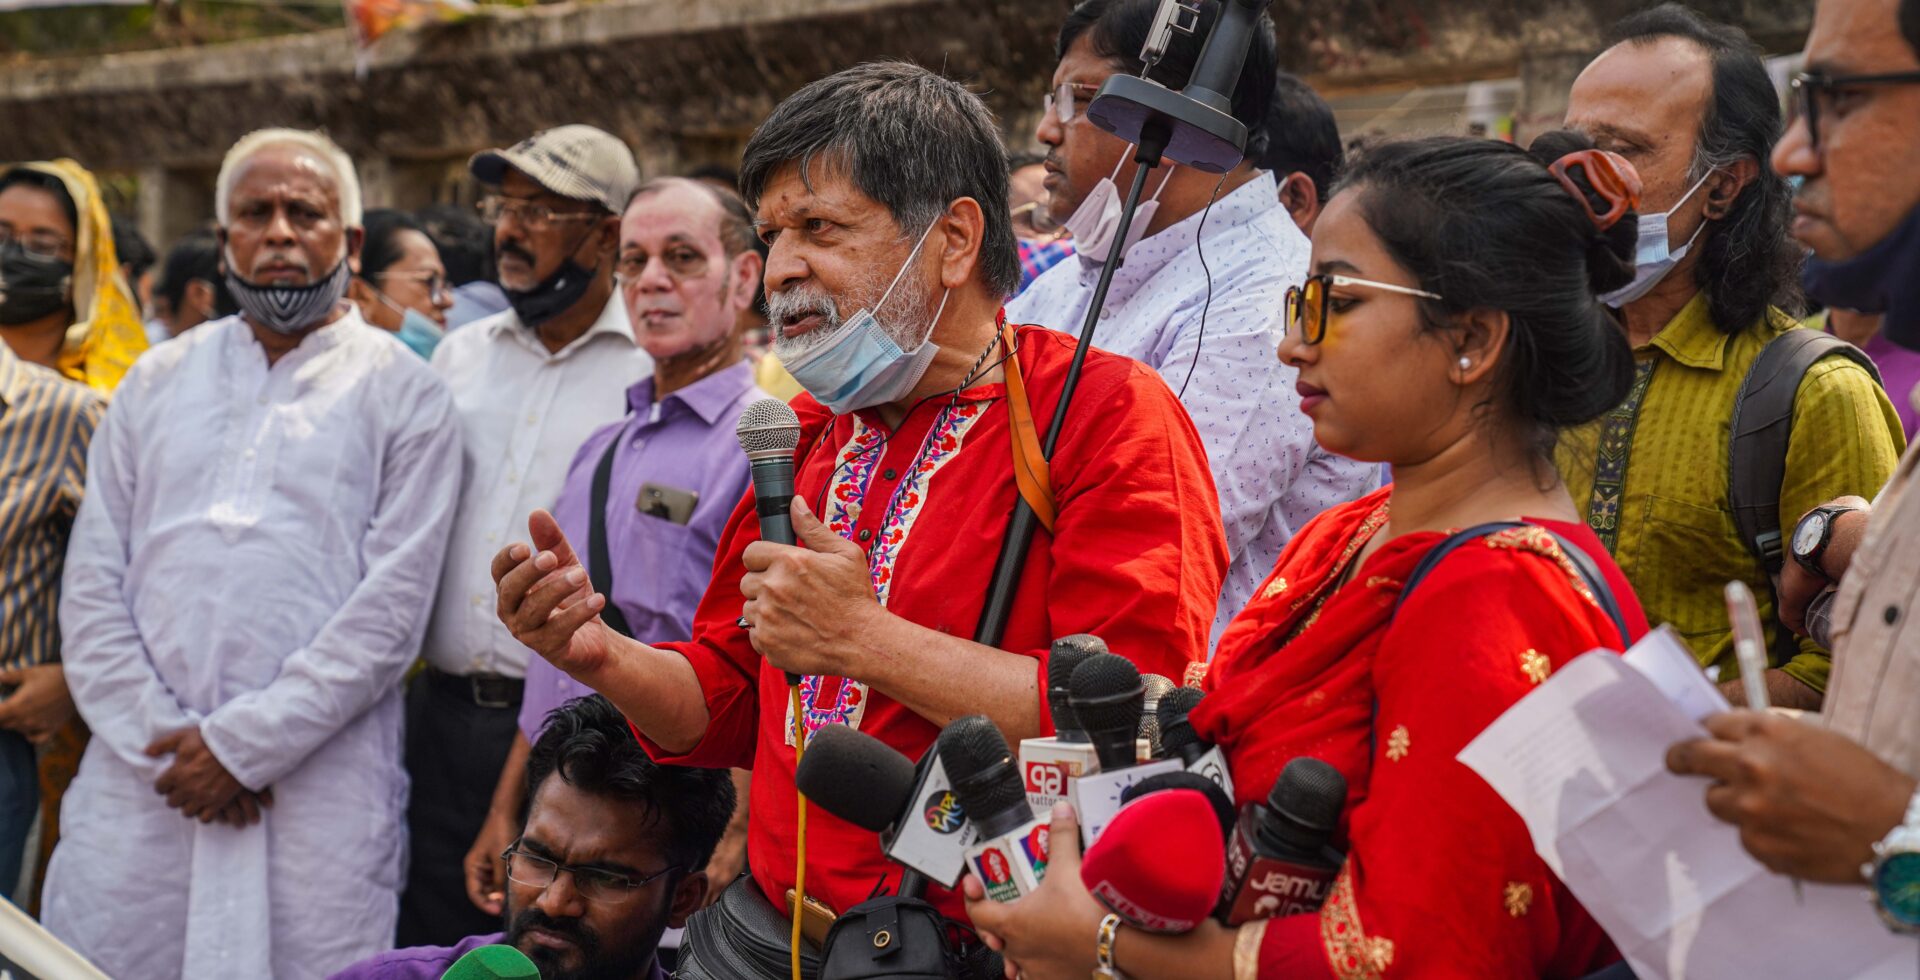 Shahidul Alam Bangladeshi photojournalist, teacher and social activist take part in a citizens' rally in Bangladesh